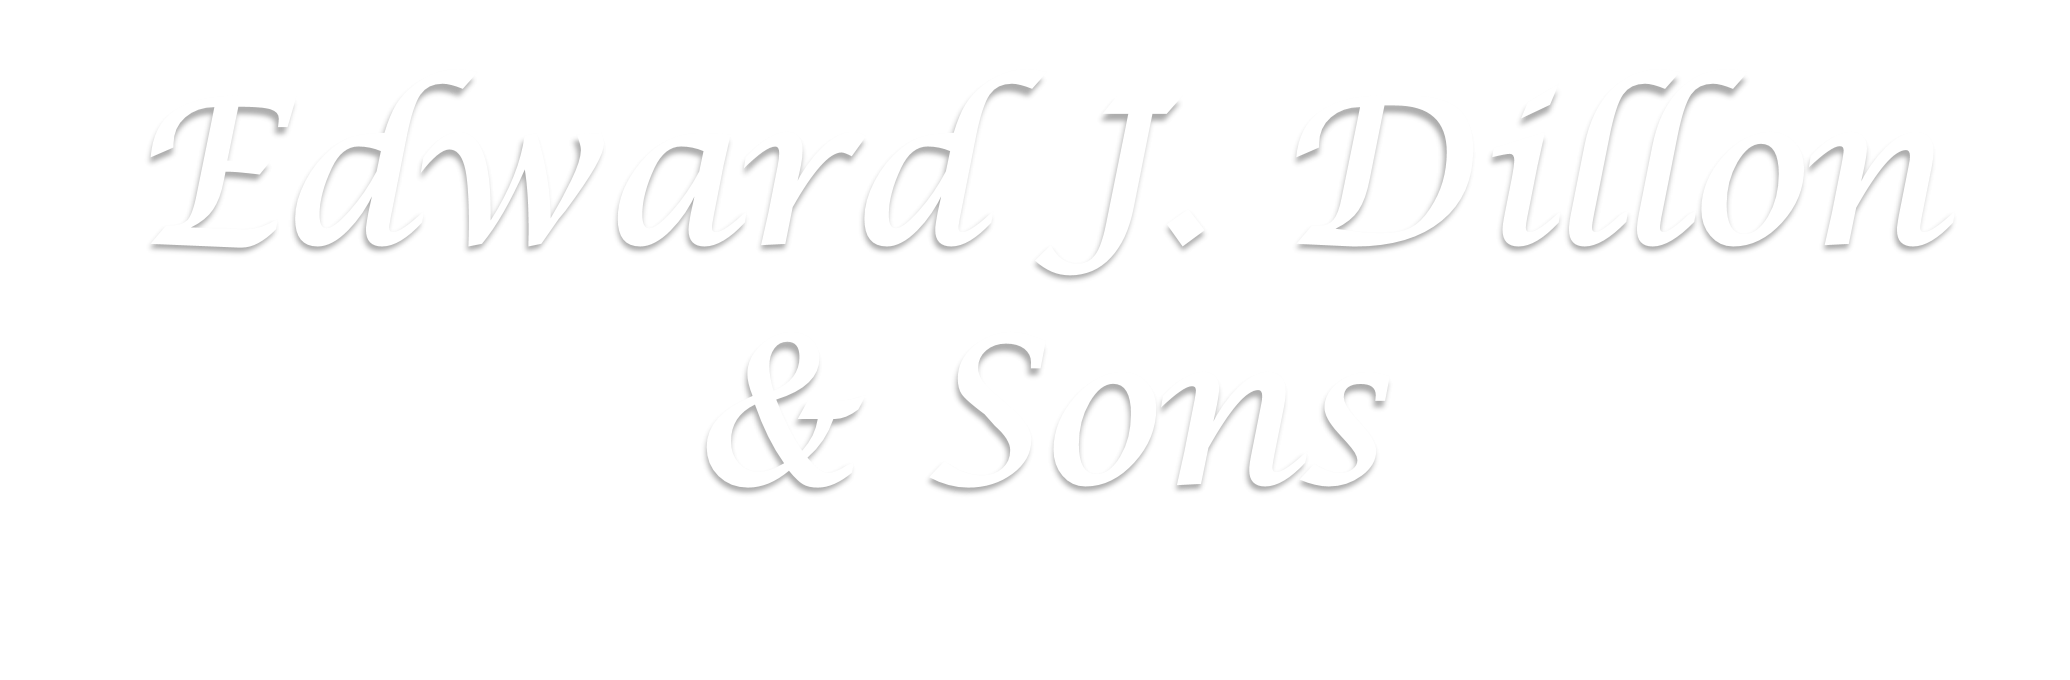 Edward J. Dillon & Sons - Stratford, CT 06615 - (203)378-2226 | ShowMeLocal.com